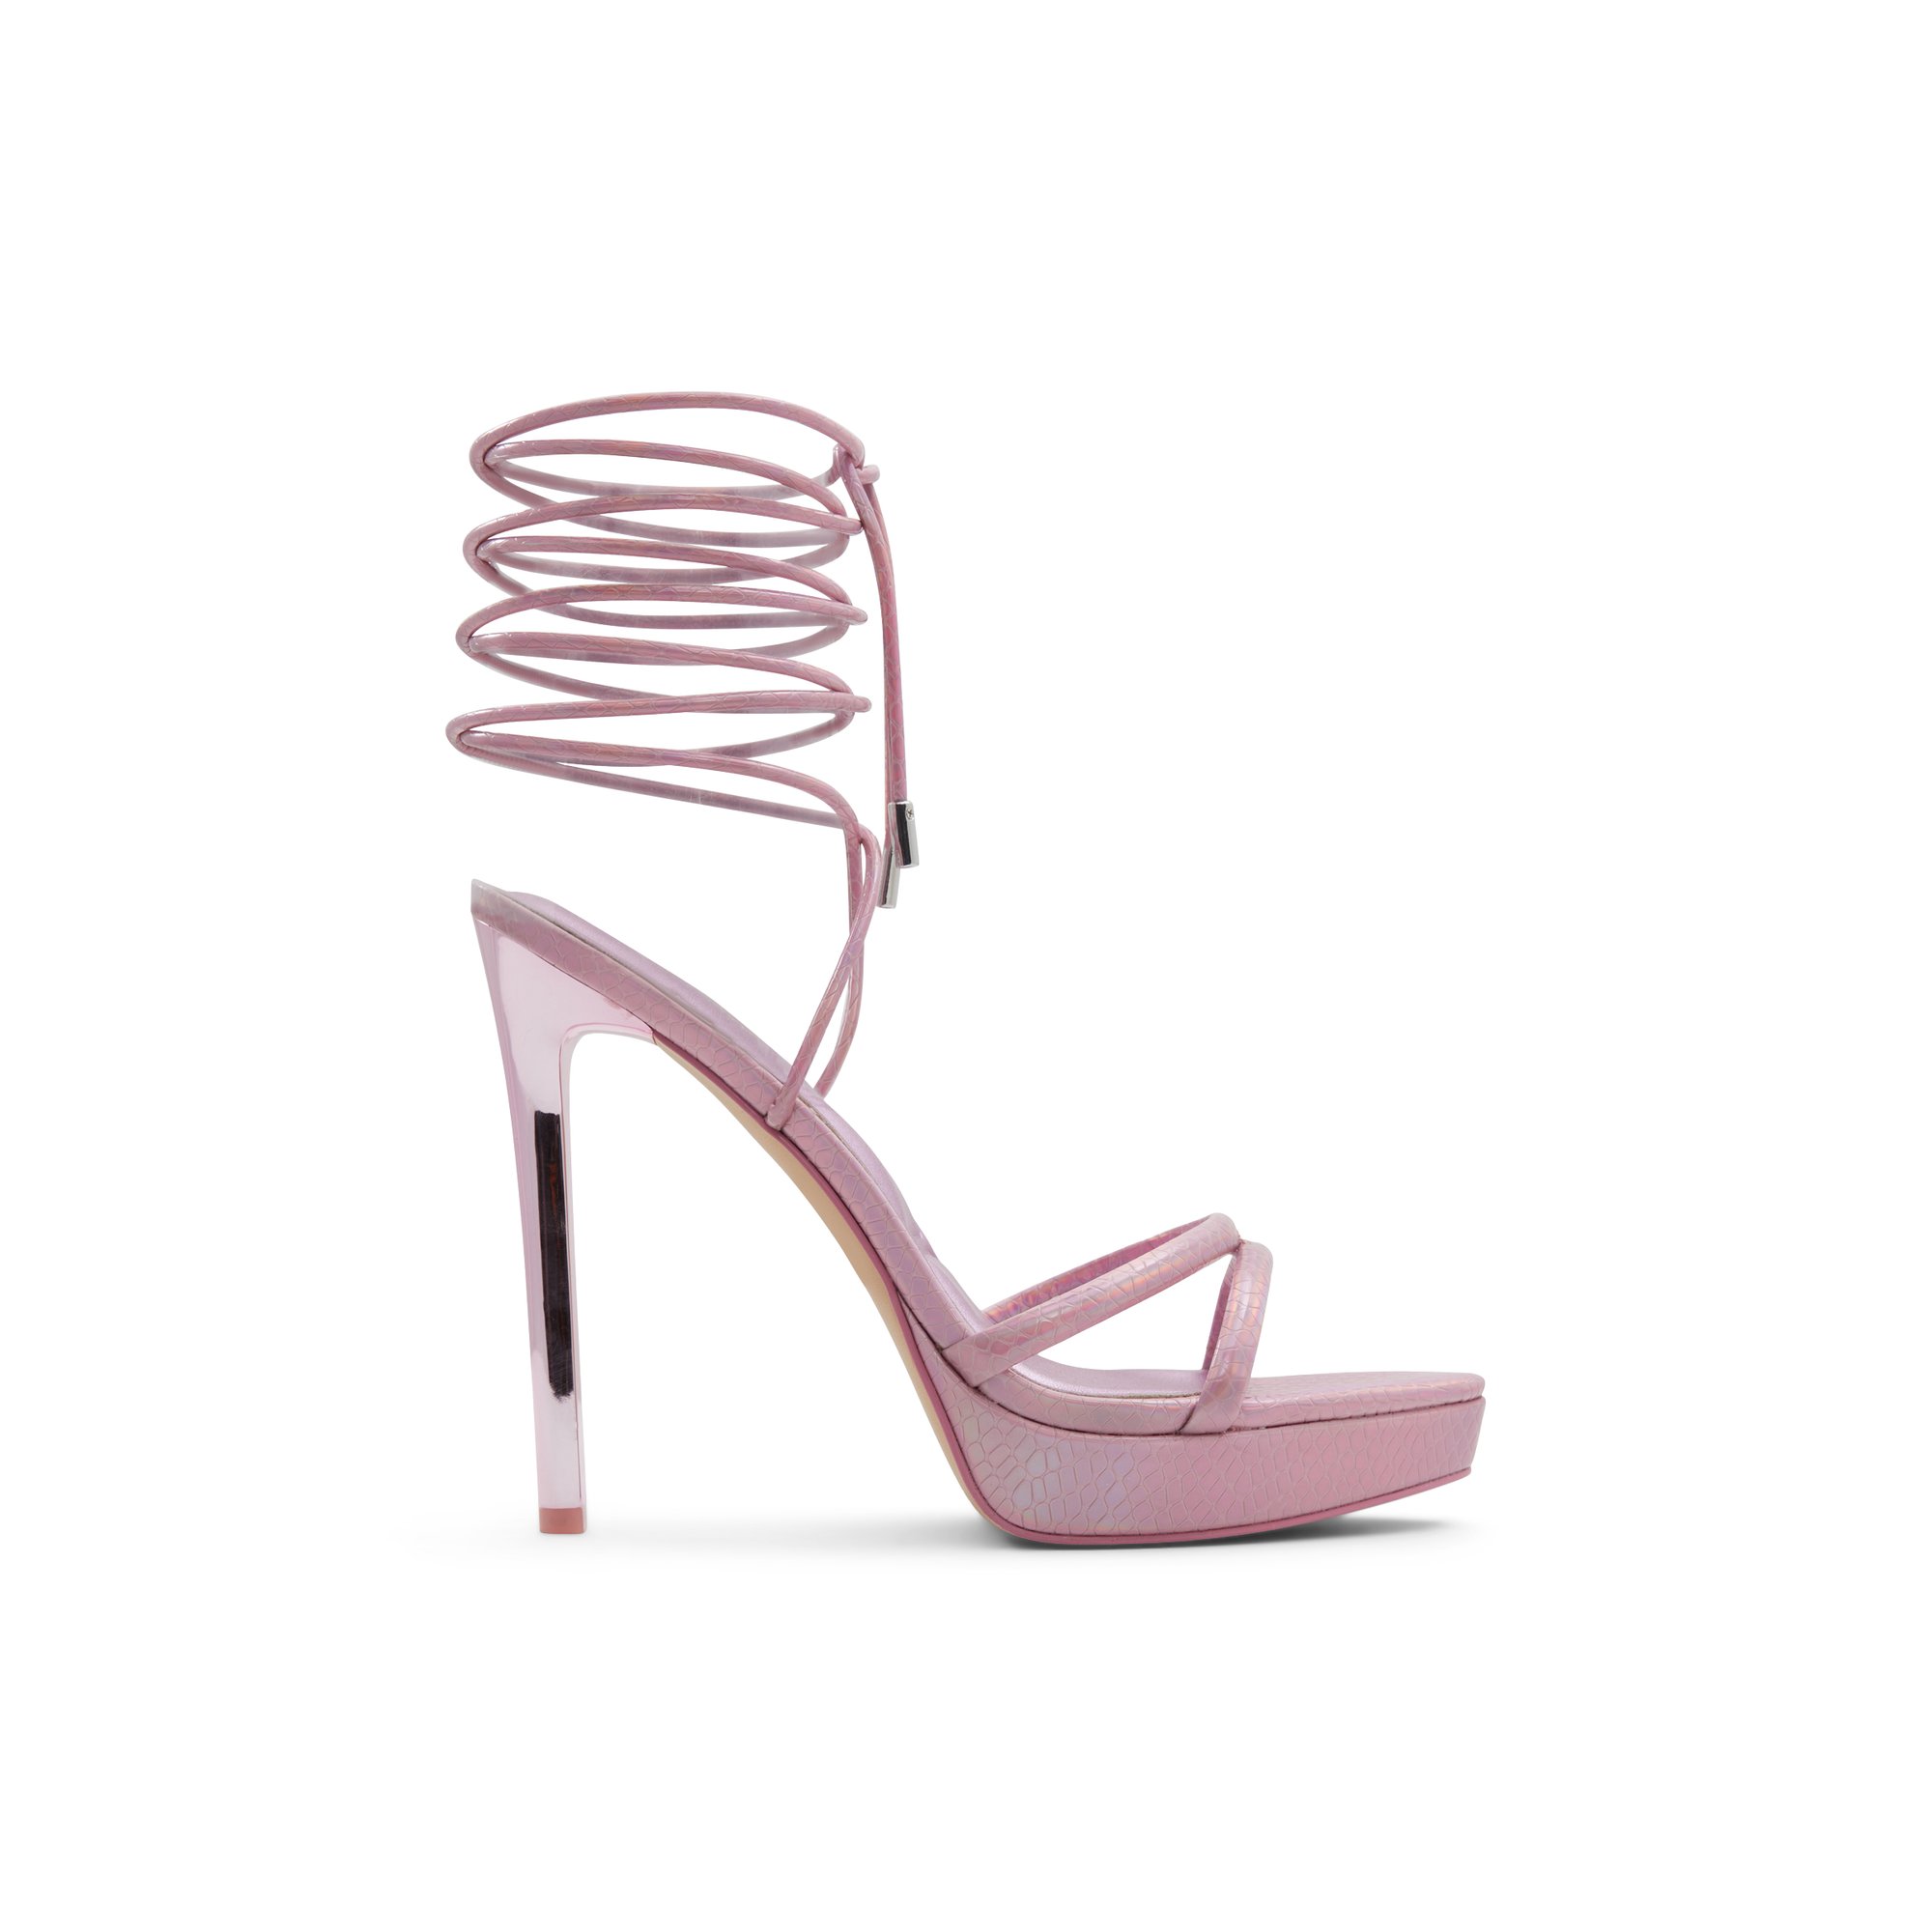 ALDO Izabella - Women's Sandals Heeled - Pink